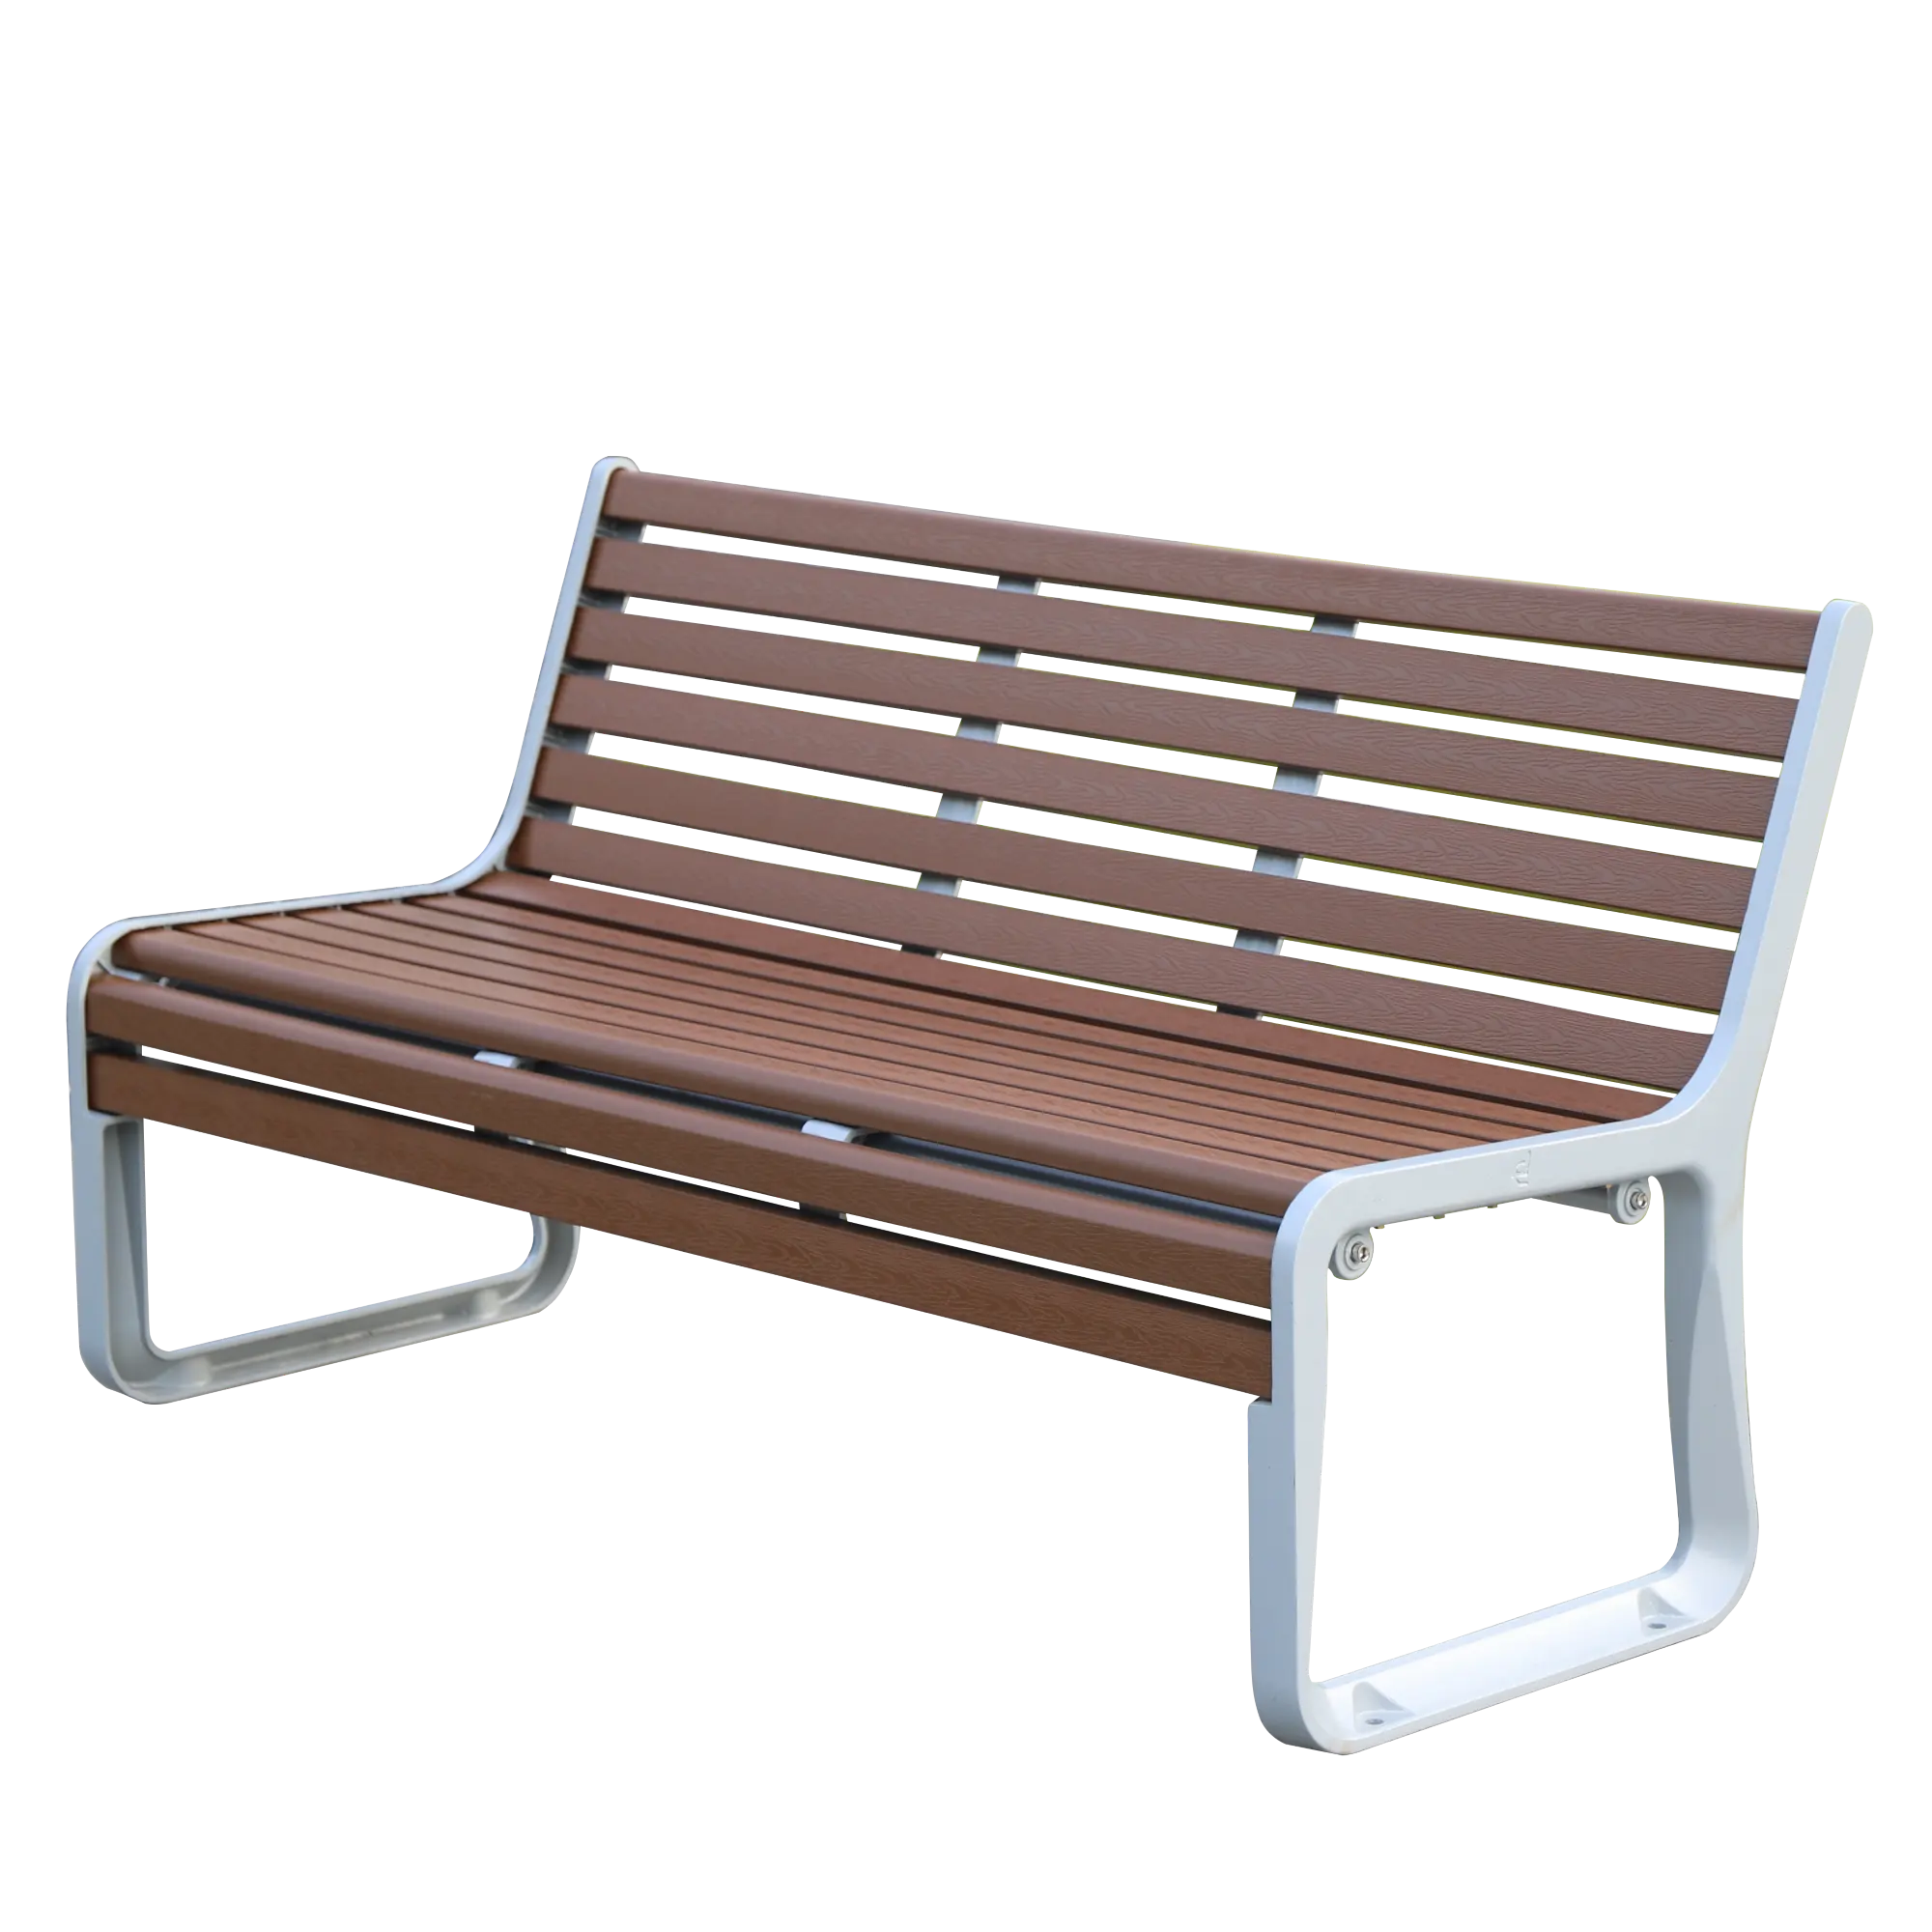 Teak aluminum metal bench chair modern bench seating garden patio outdoor plastic wooden benches